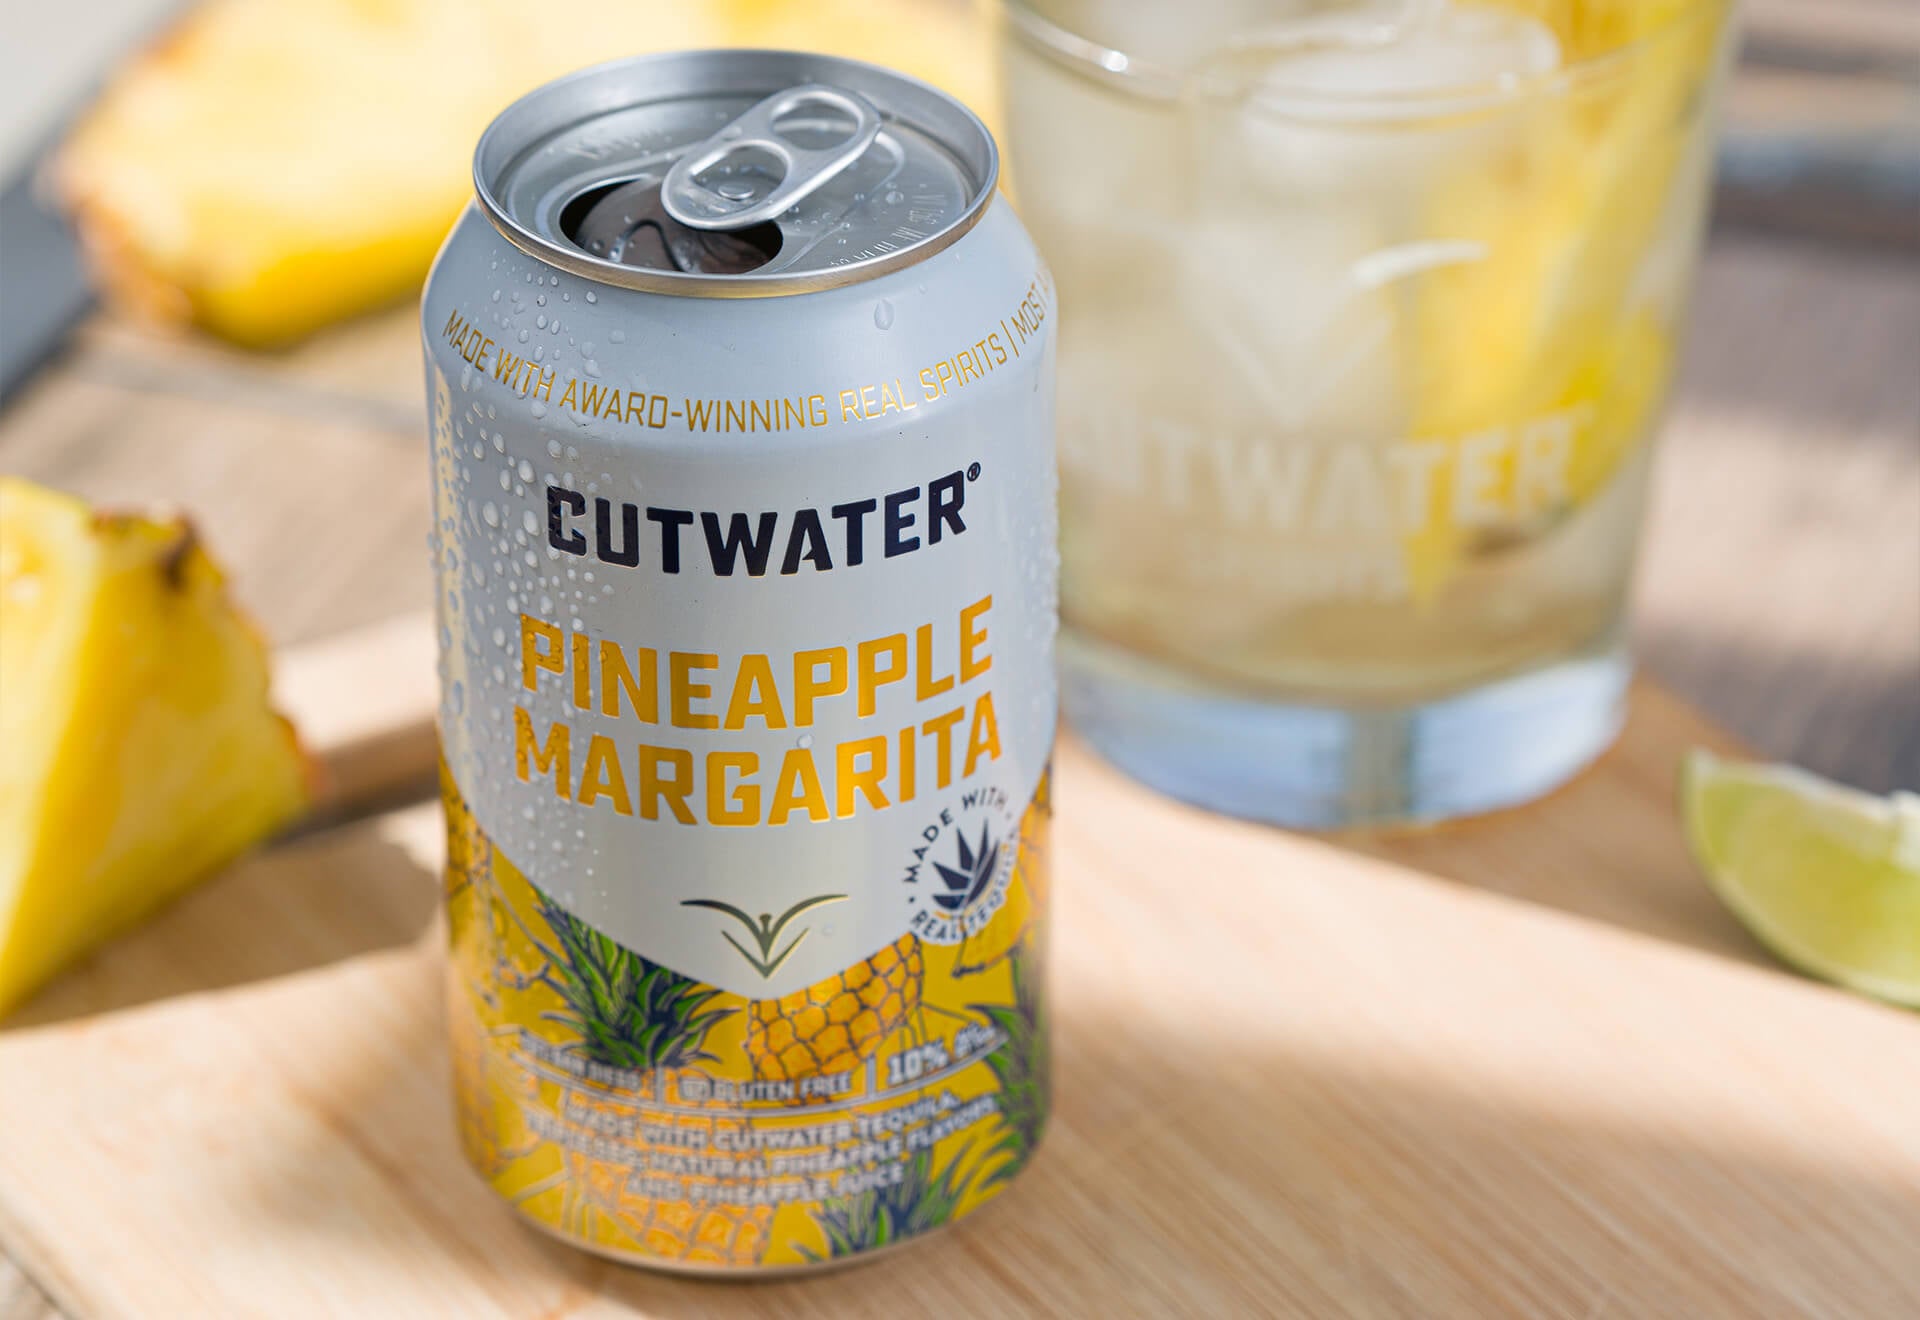 Cutwater Pineapple Margarita 4 pack